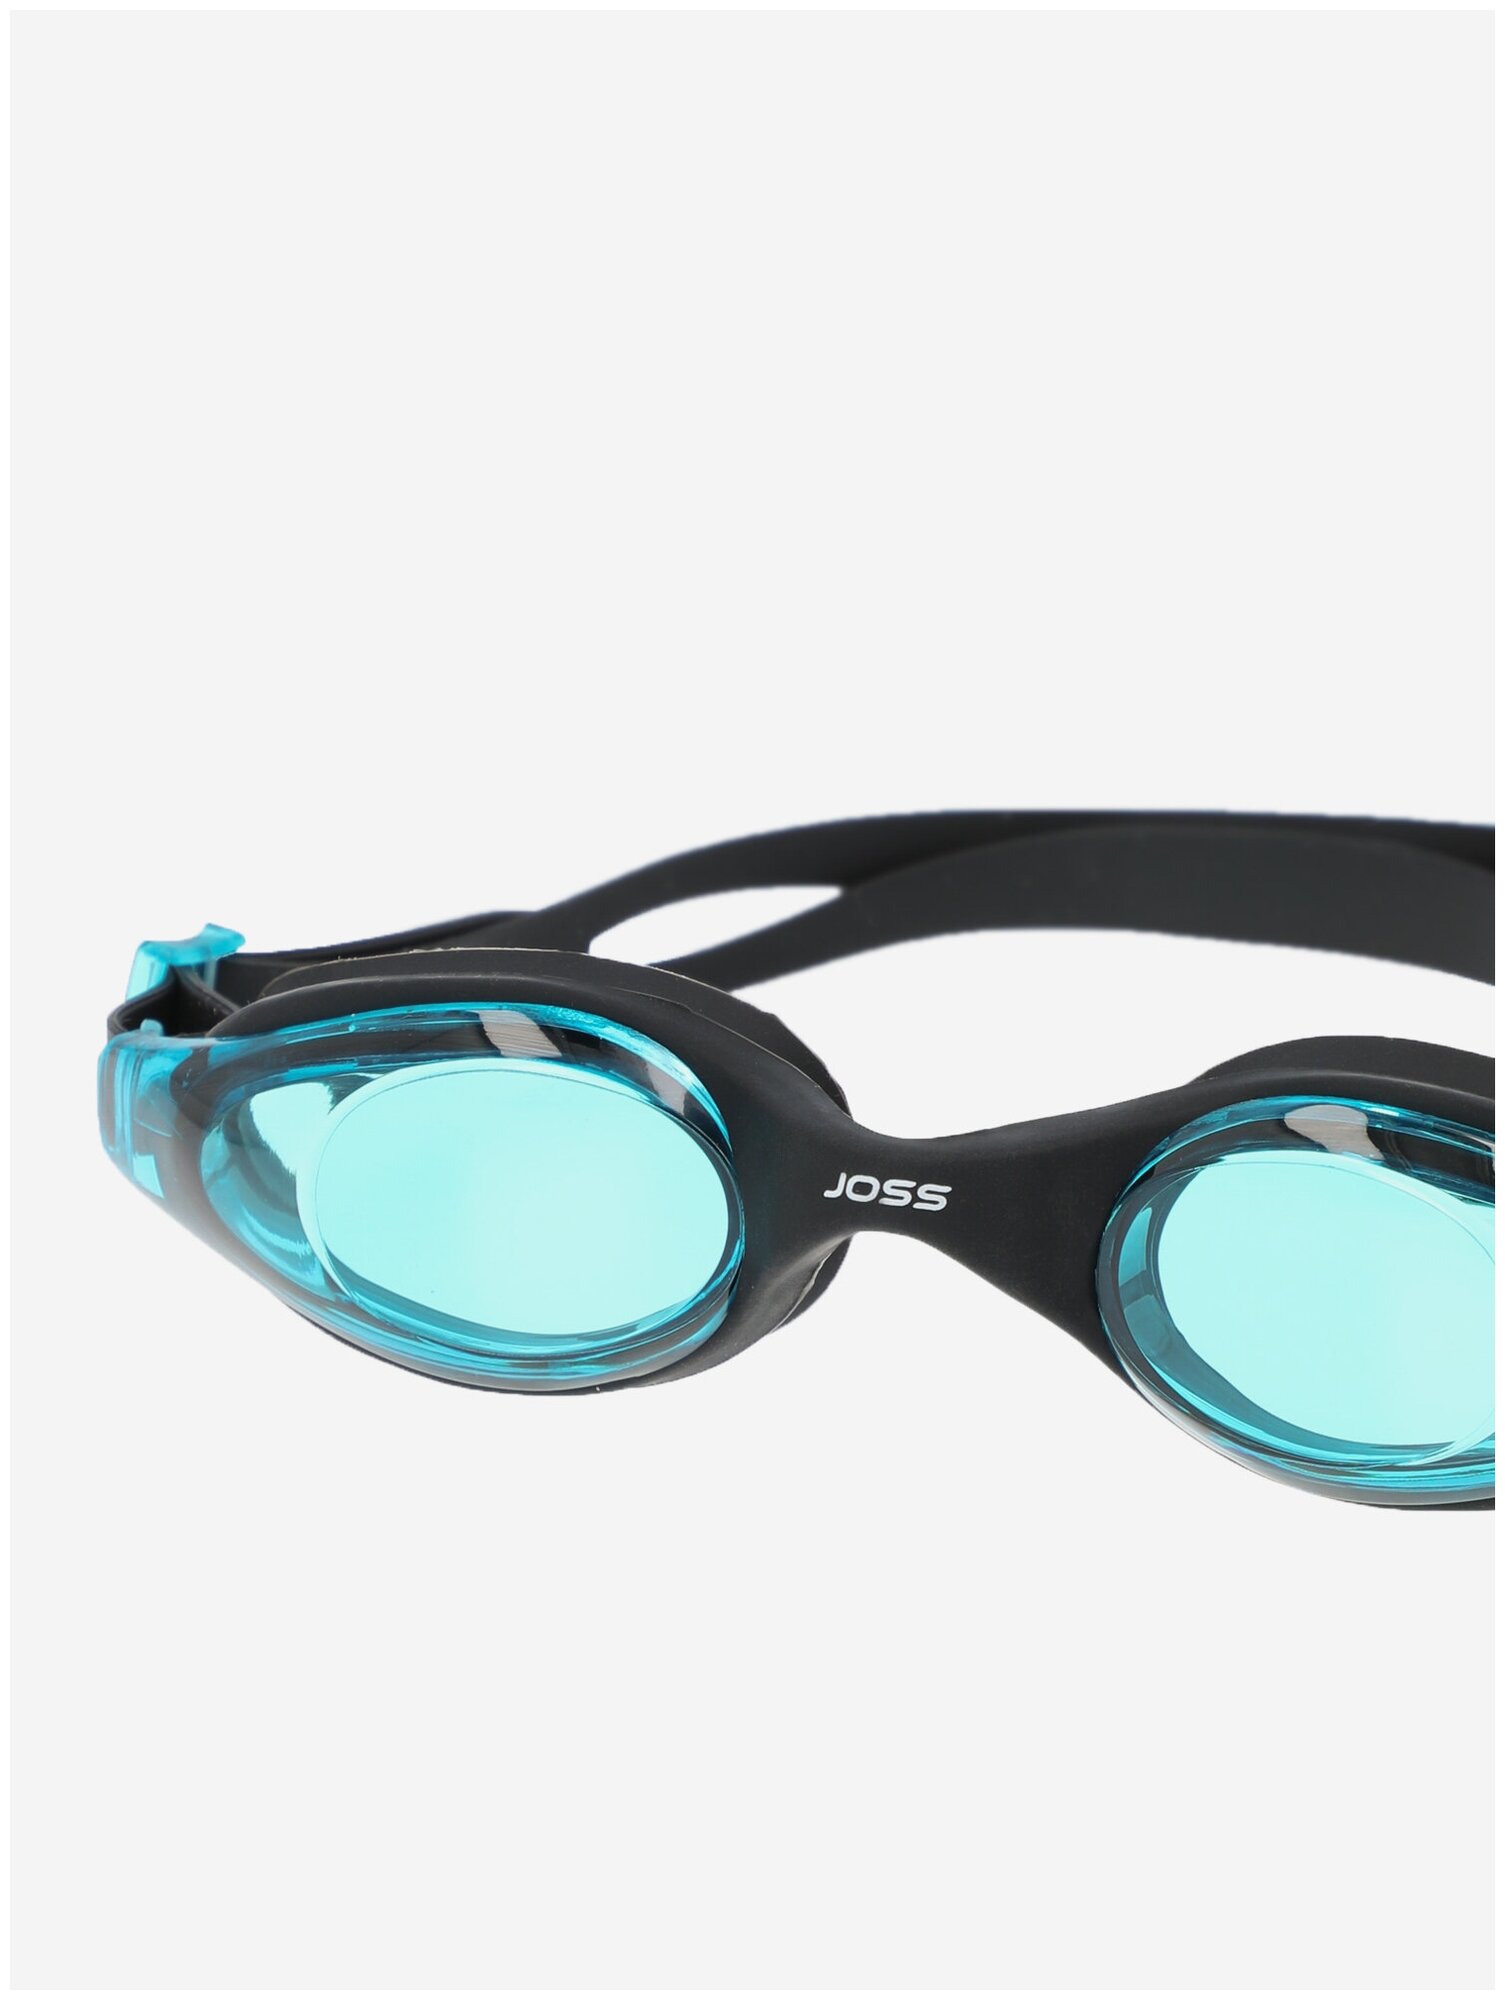 Очки для плавания Joss Triton Черный; RU: Без размера, Ориг: one size